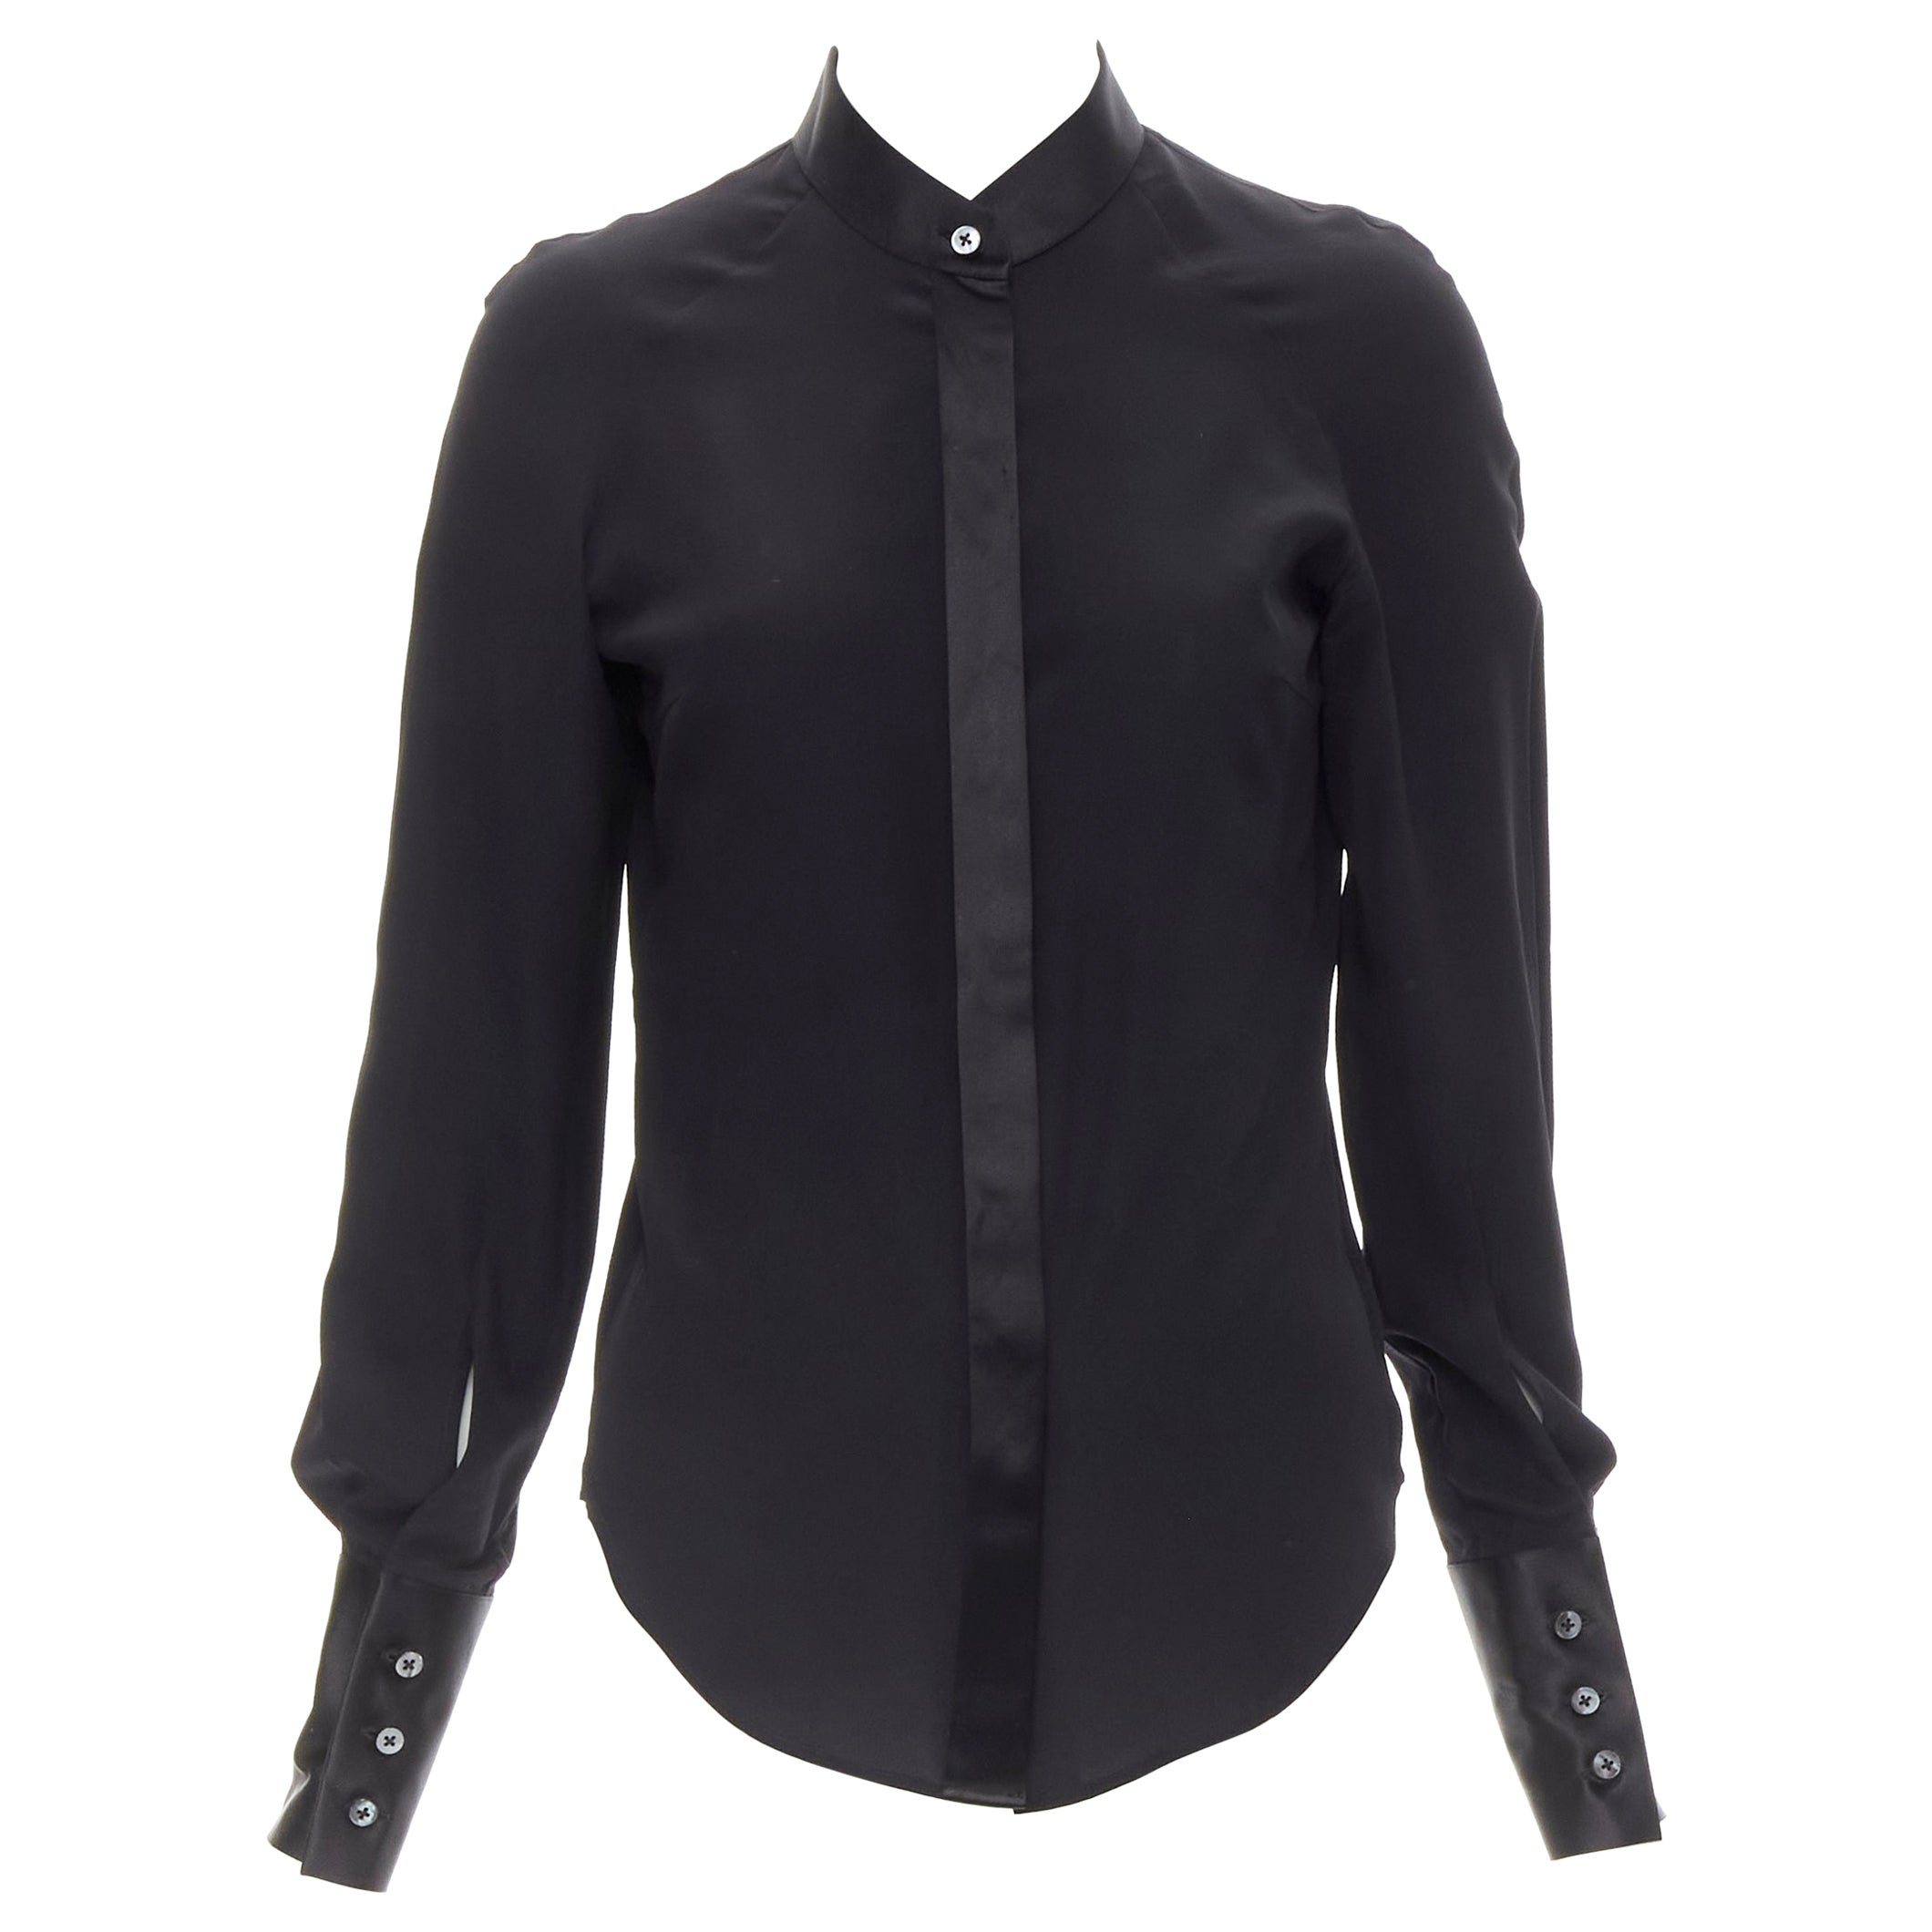 RARE Chanel White Top with Black Bowtie Ribbon Reversible Buttondown Shirt